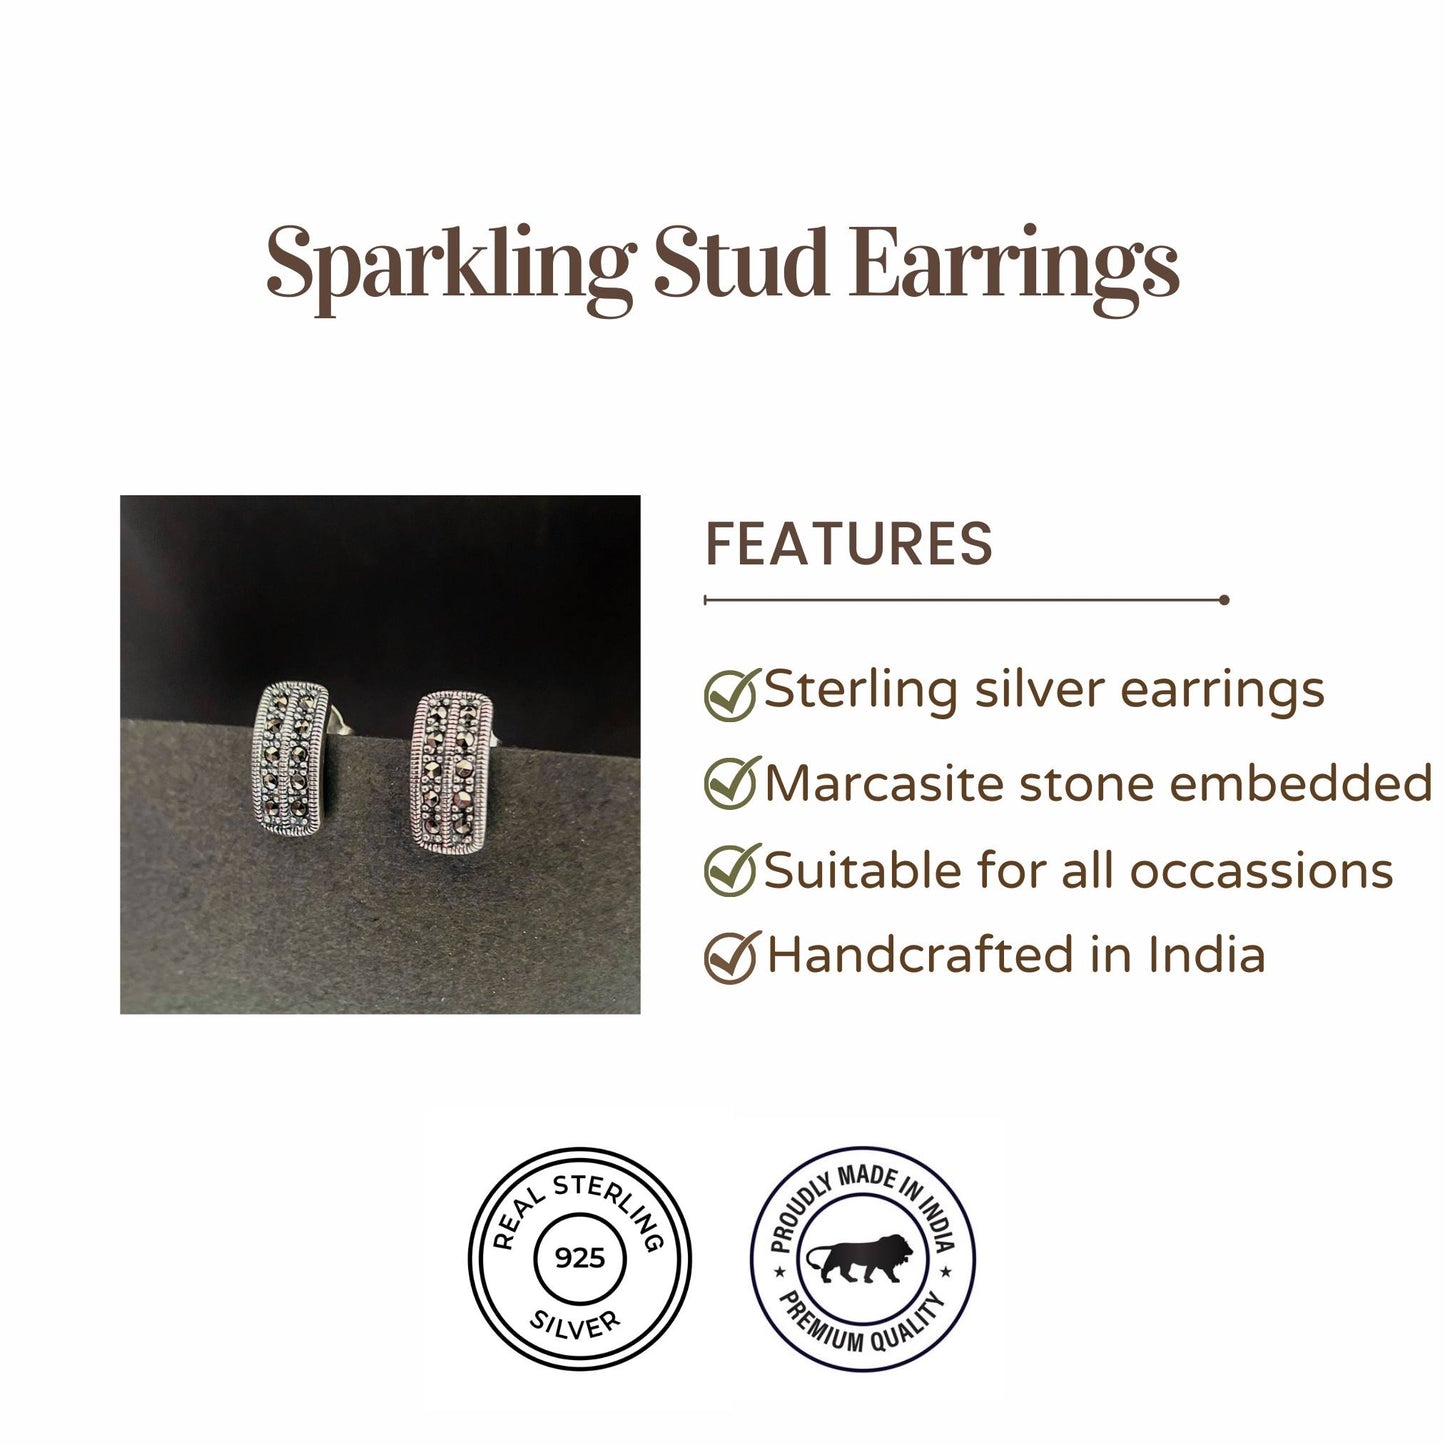 Sparkling Stud Earrings